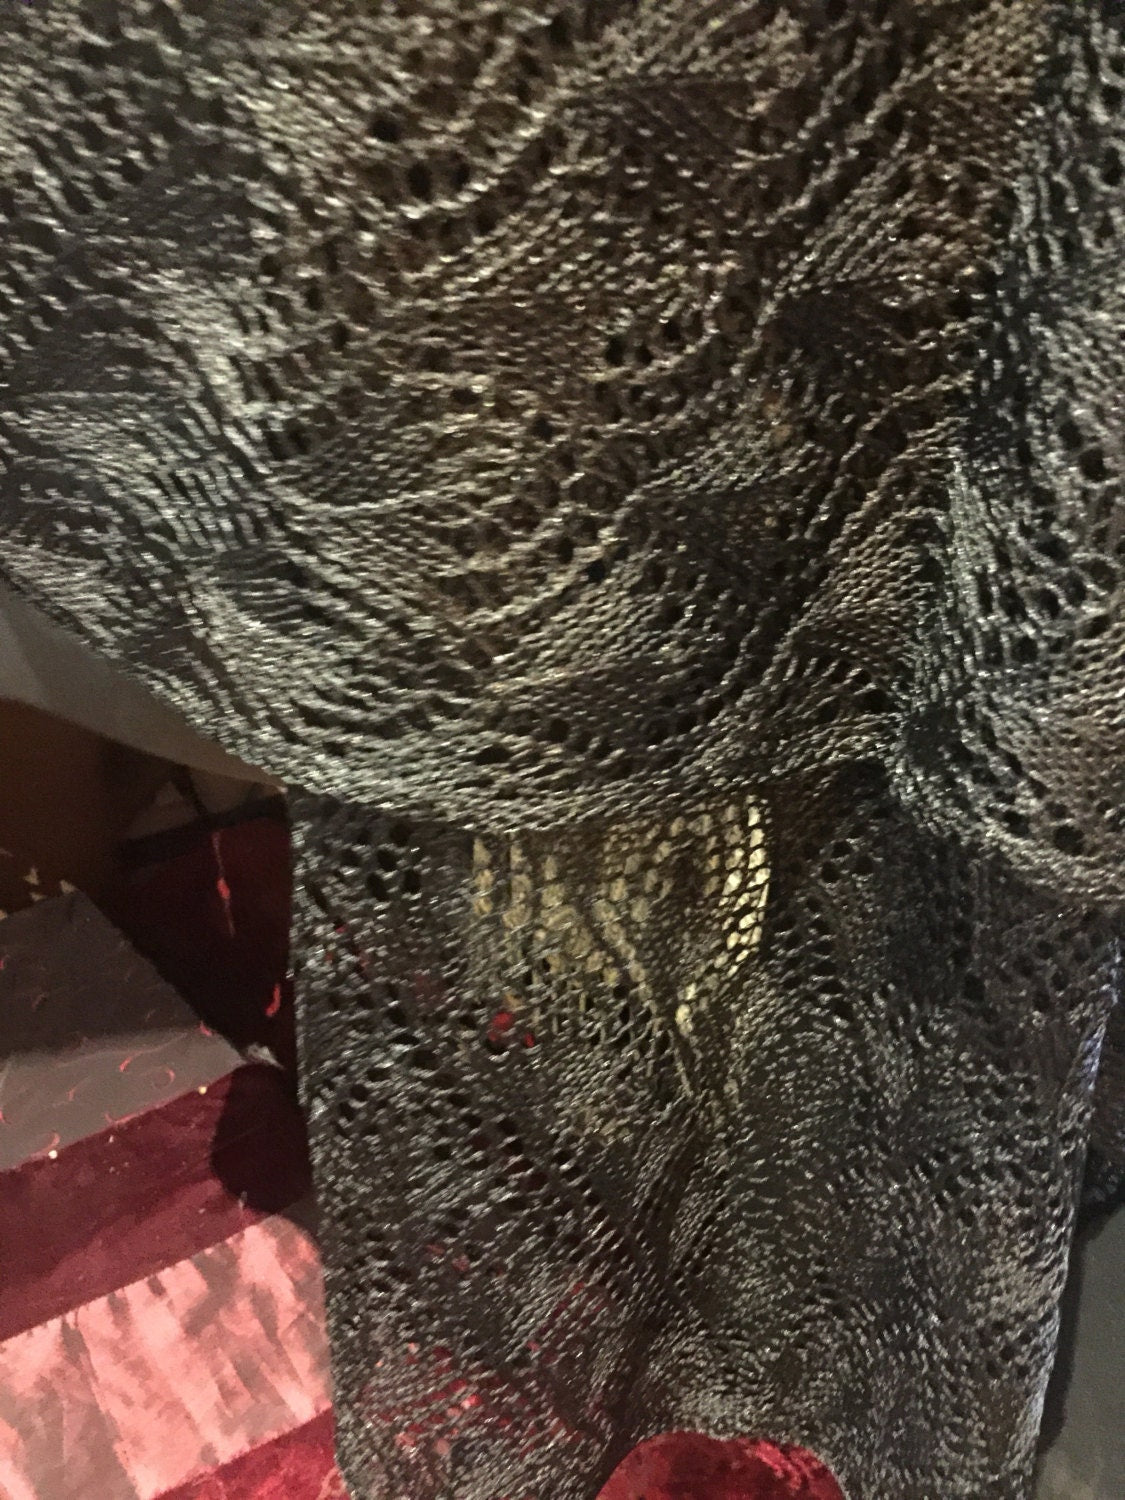 Vintage Black Lace crochet shawl Wrap